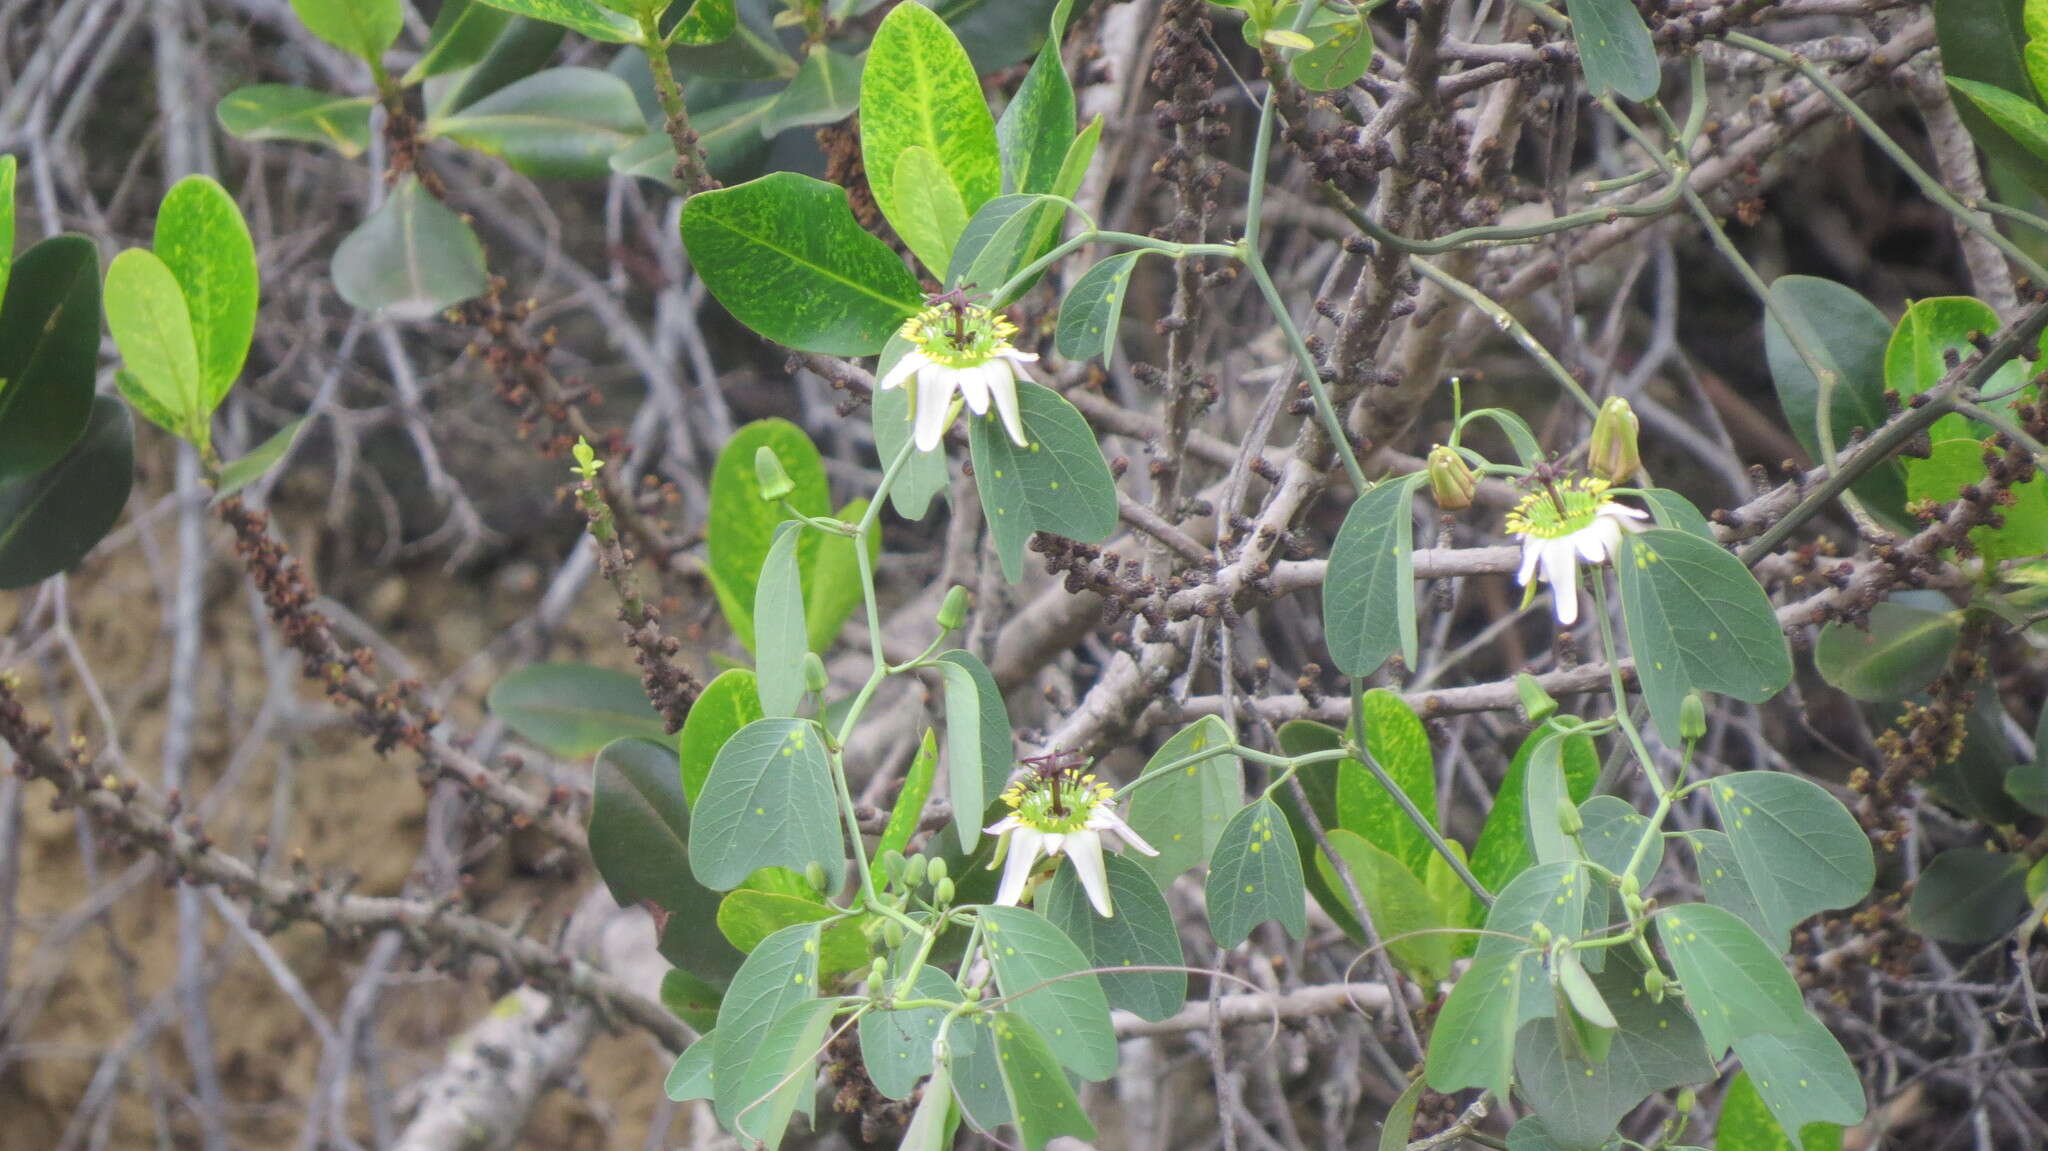 Image of Passiflora cuneata Willd.